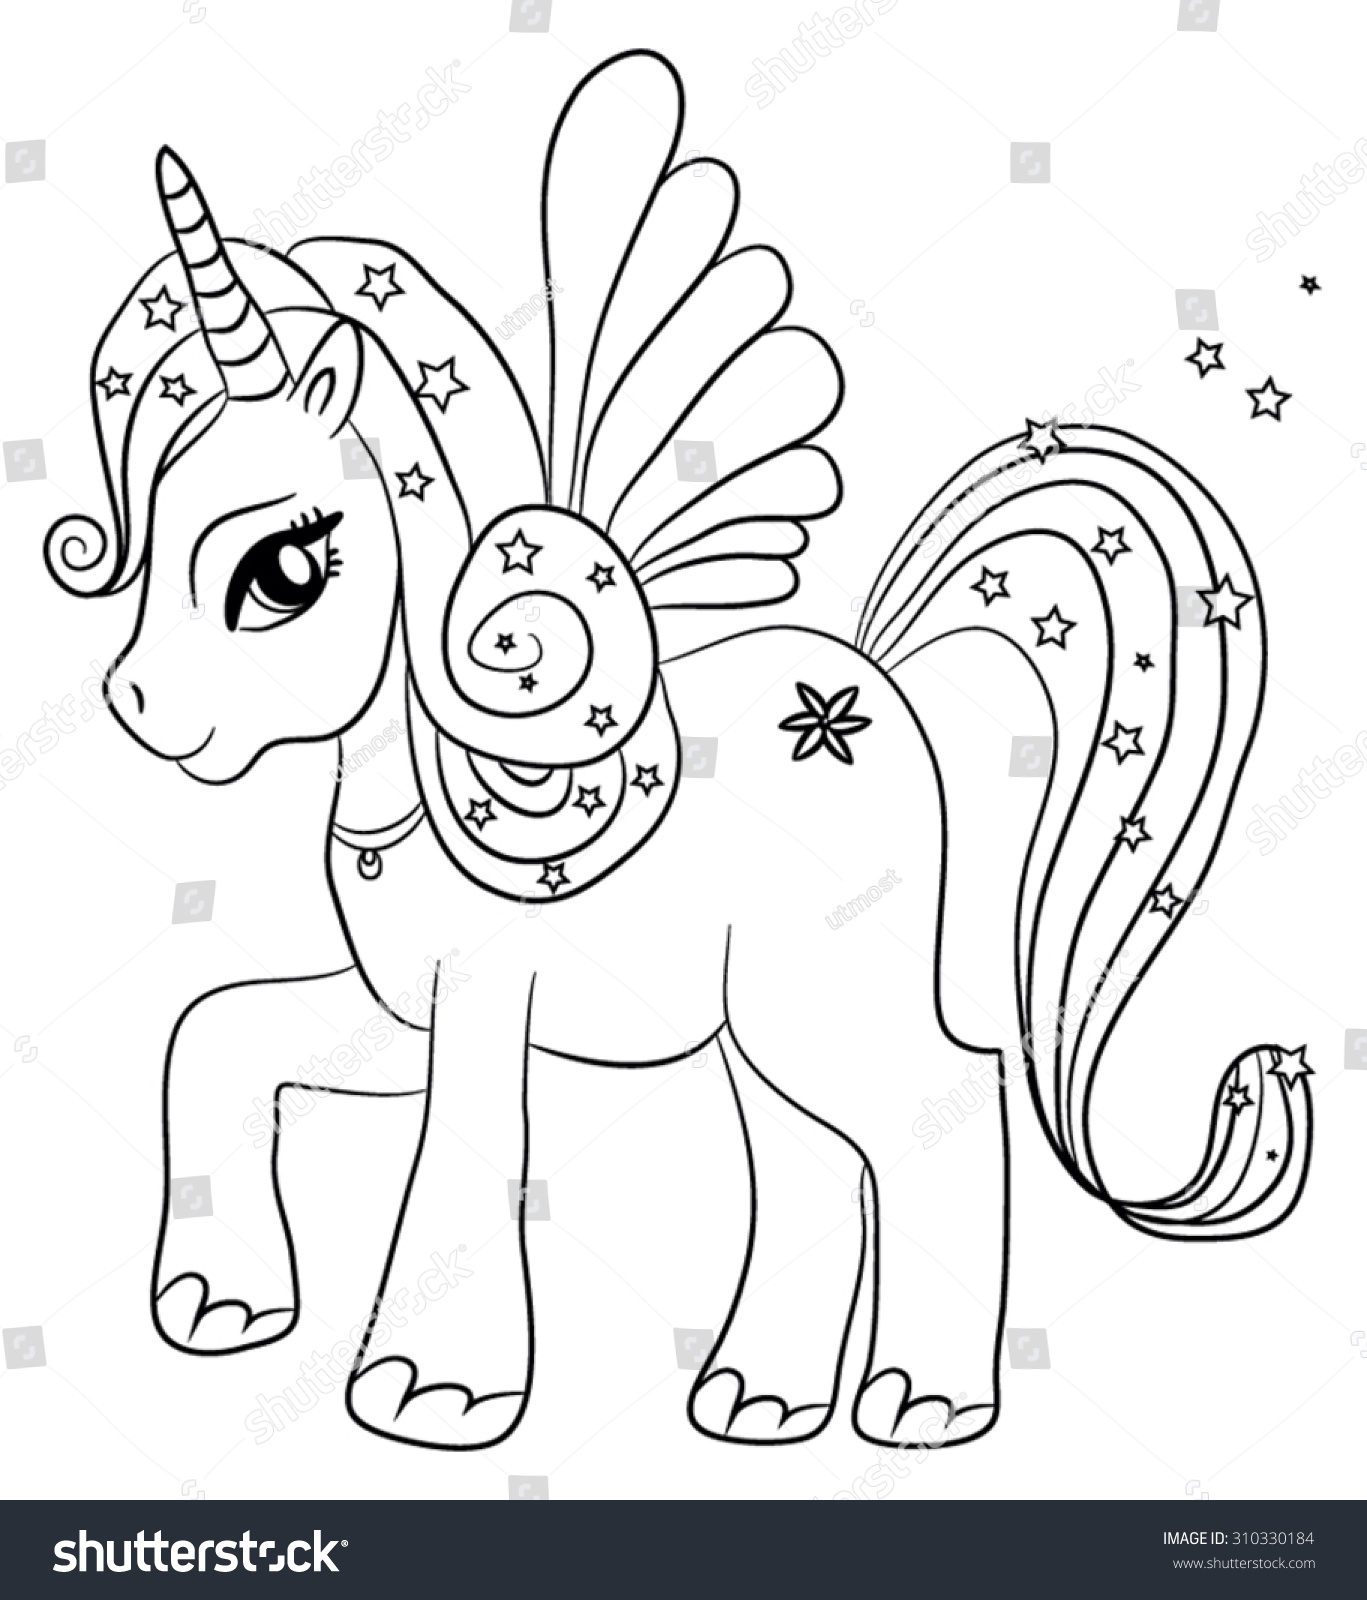  Cute  Cartoon Fairytale Unicorn  Coloring  Page  Stock Vector 